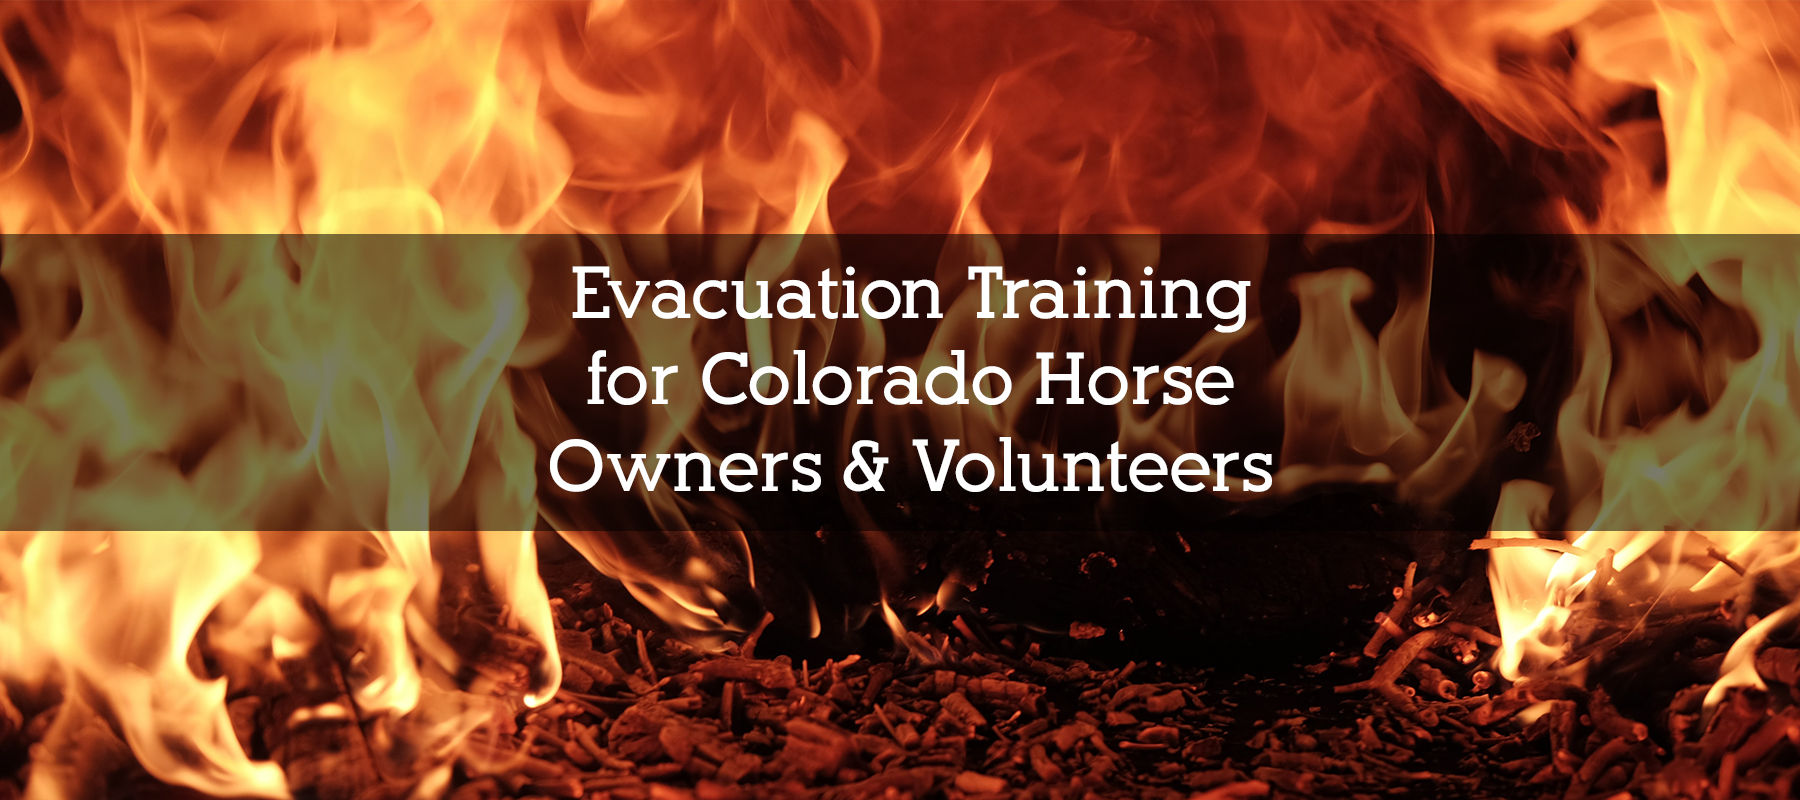 Evacuation Training for Colorado Horse Owners & Volunteers